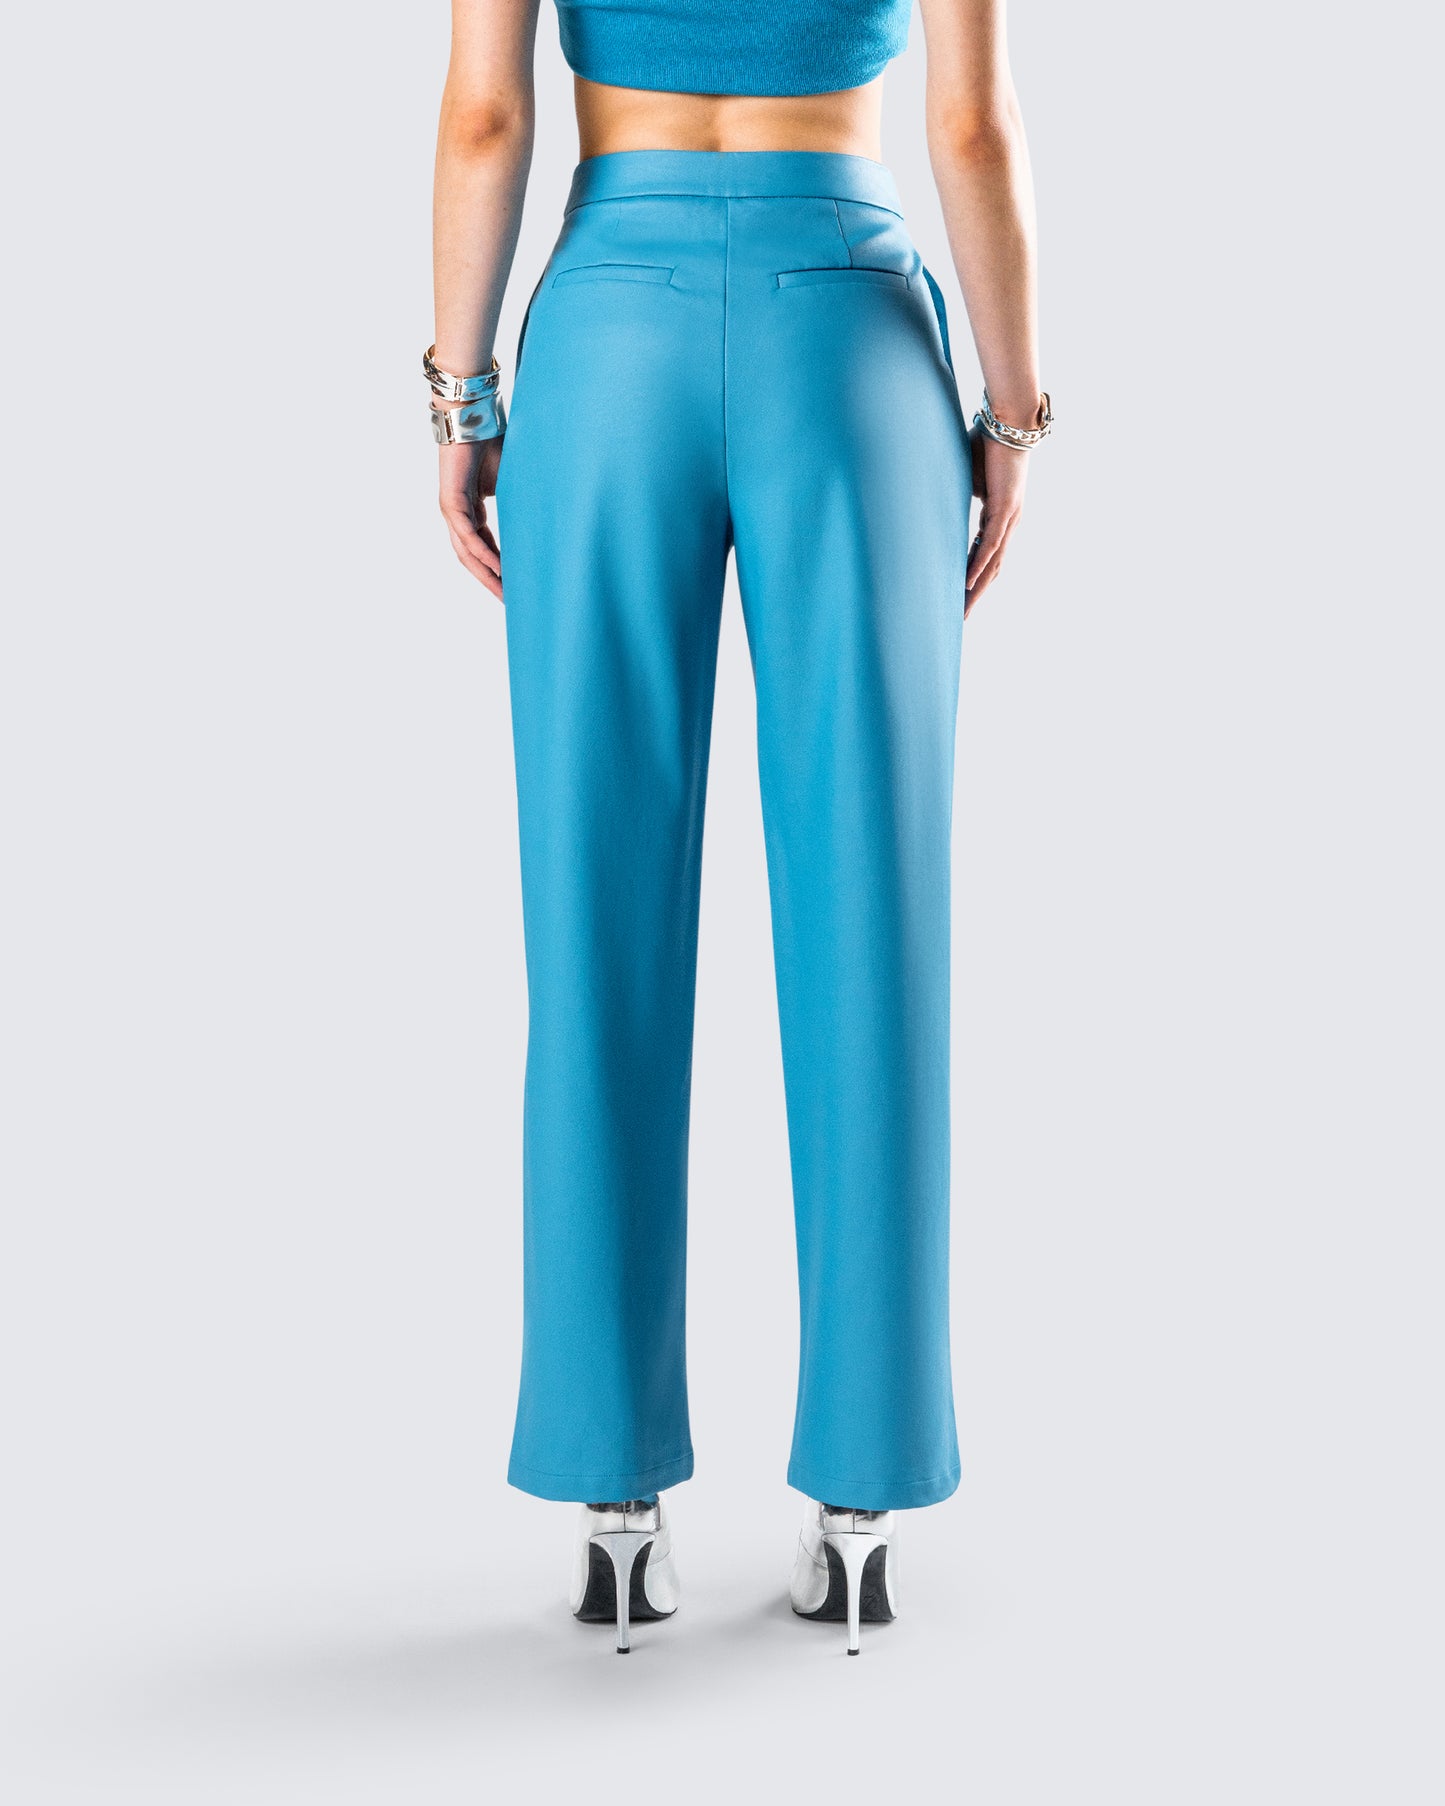 Maz Turquoise Vegan Leather Pant